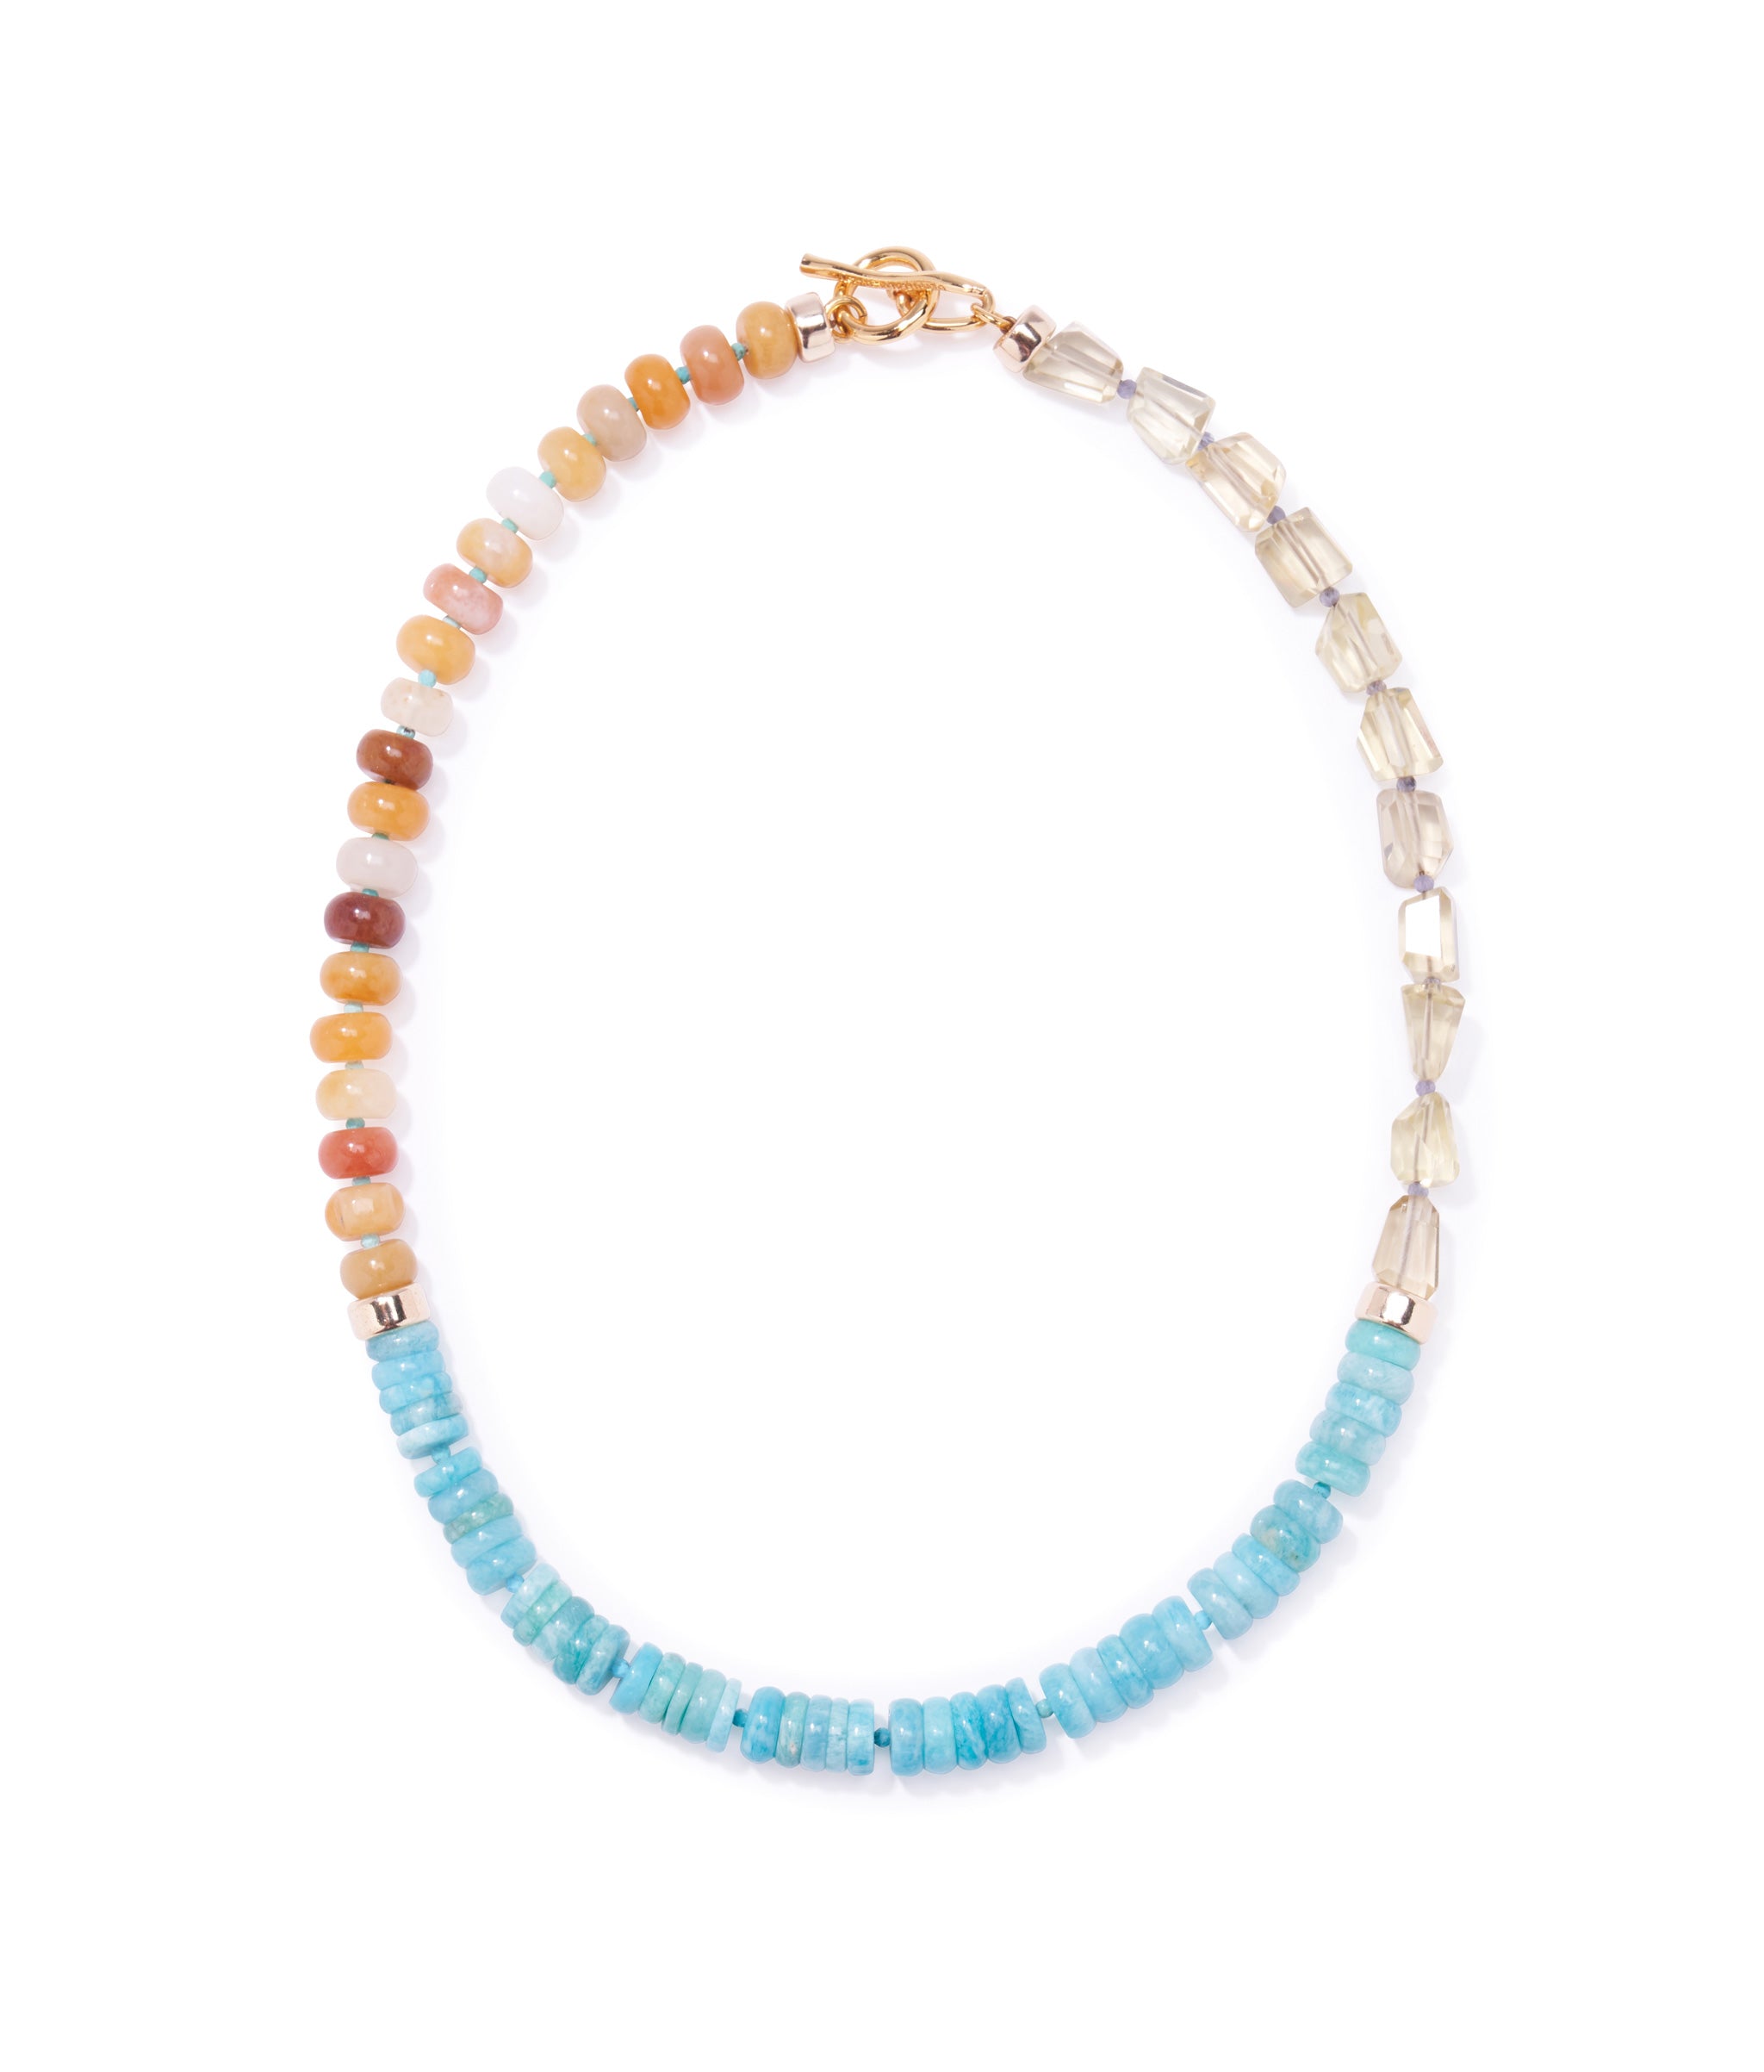 Chama Necklace in Seaside. Single-strand of color-blocked beads in lemon quartz, yellow aventurine and aqua amazonite.